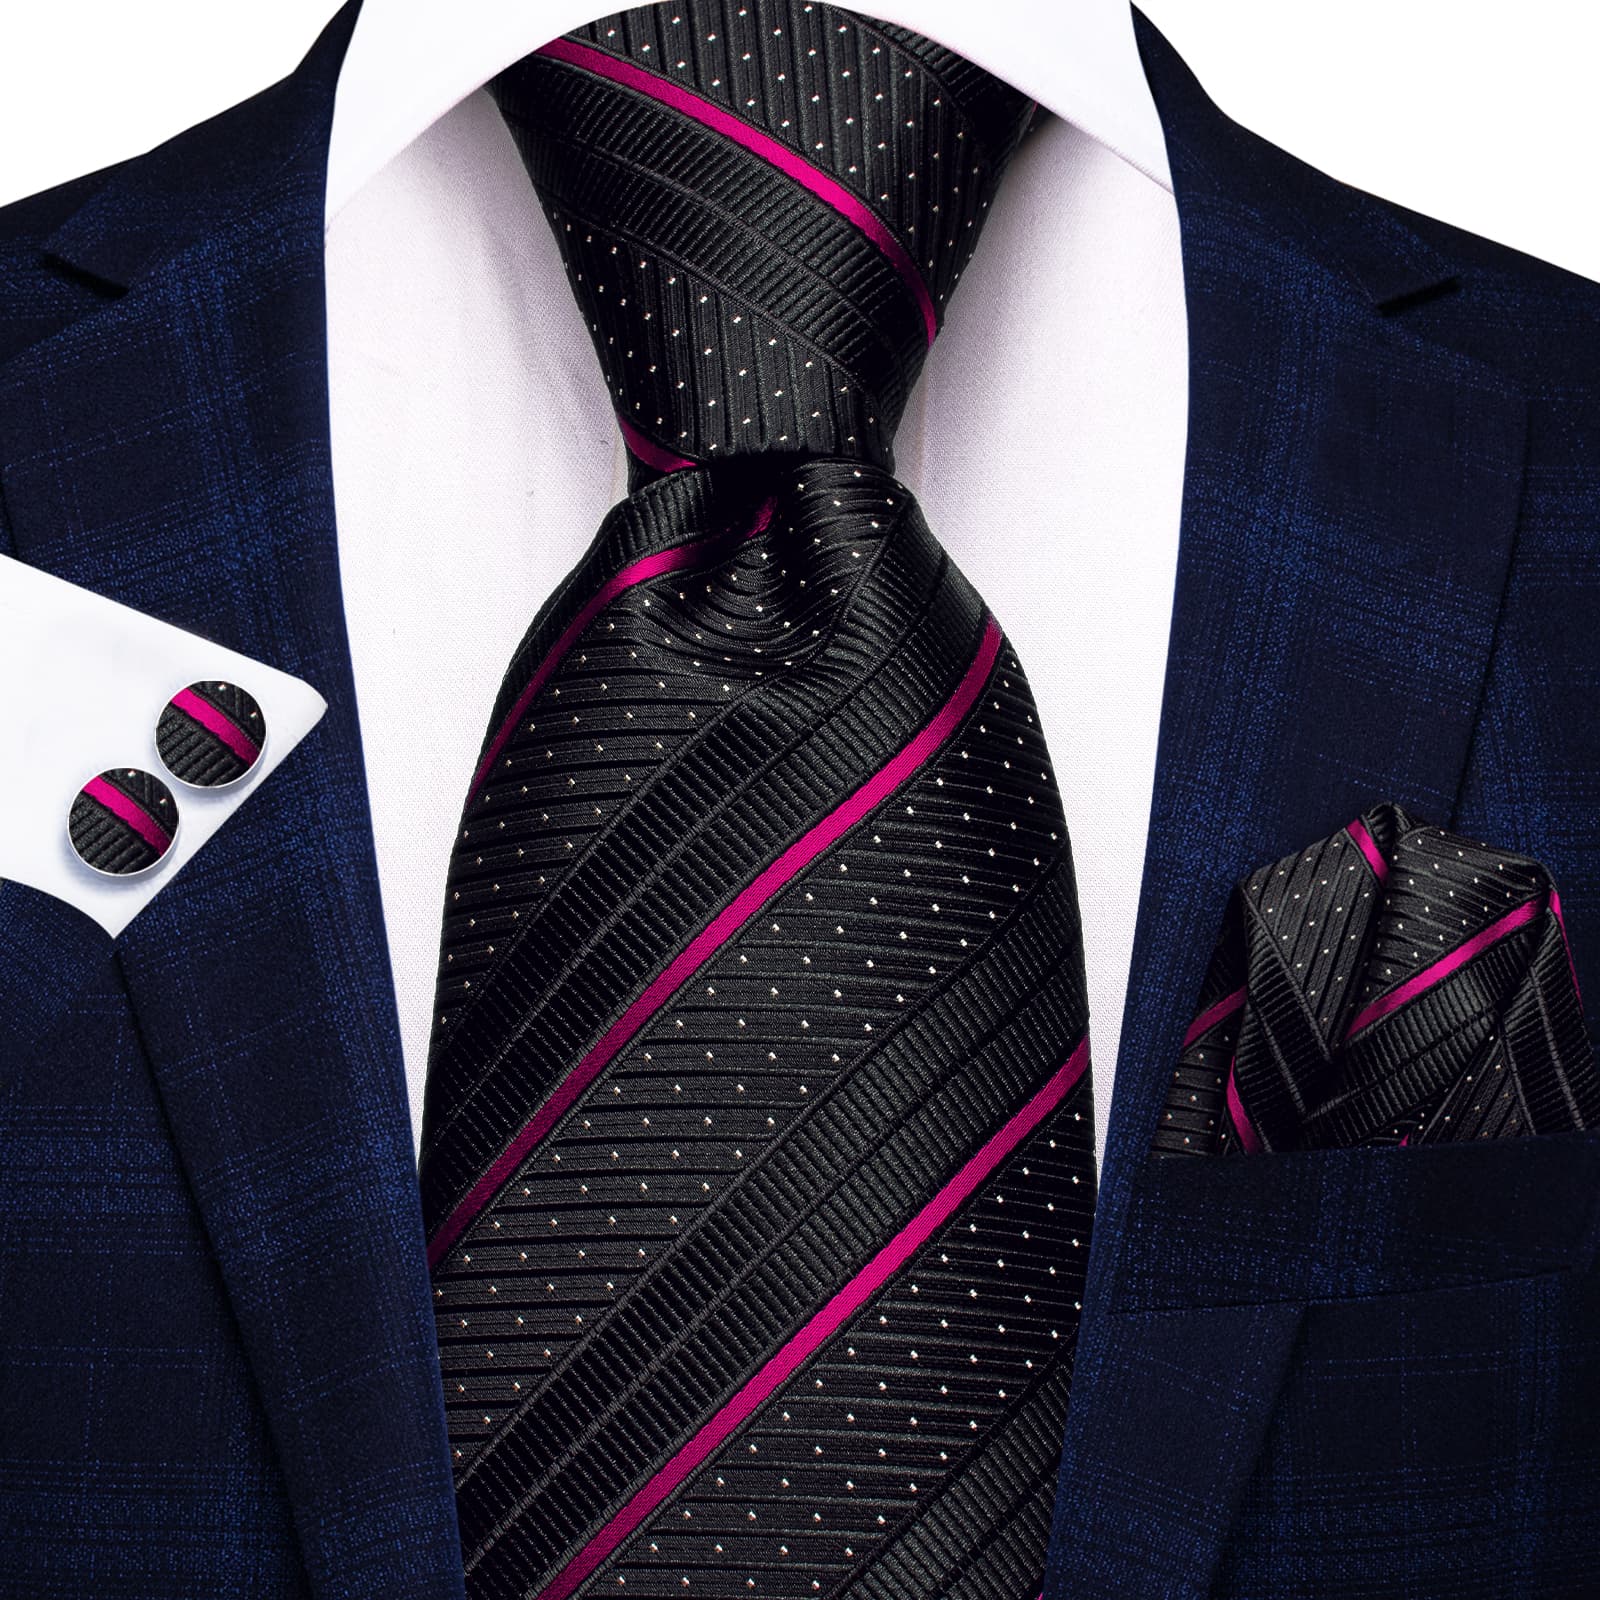 Hi-Tie Men's Black Tie Deep Pink Stripes Jacquard Silk Necktie Set